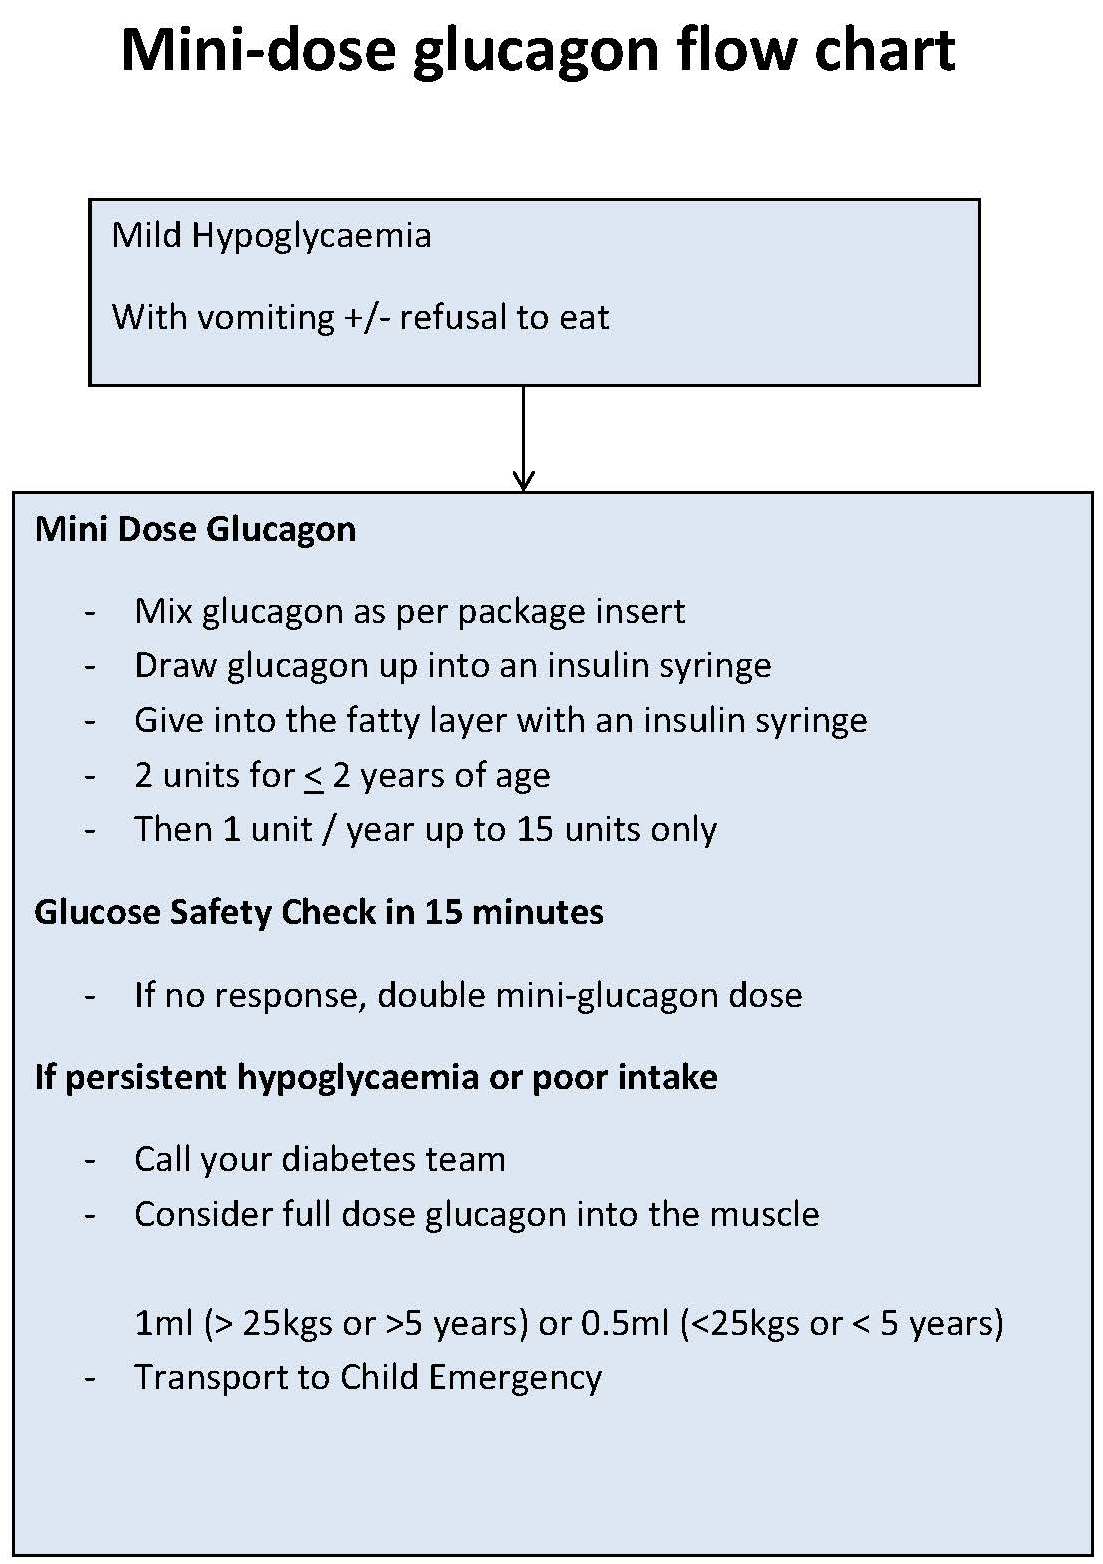 Mini dose glucagon flow chart